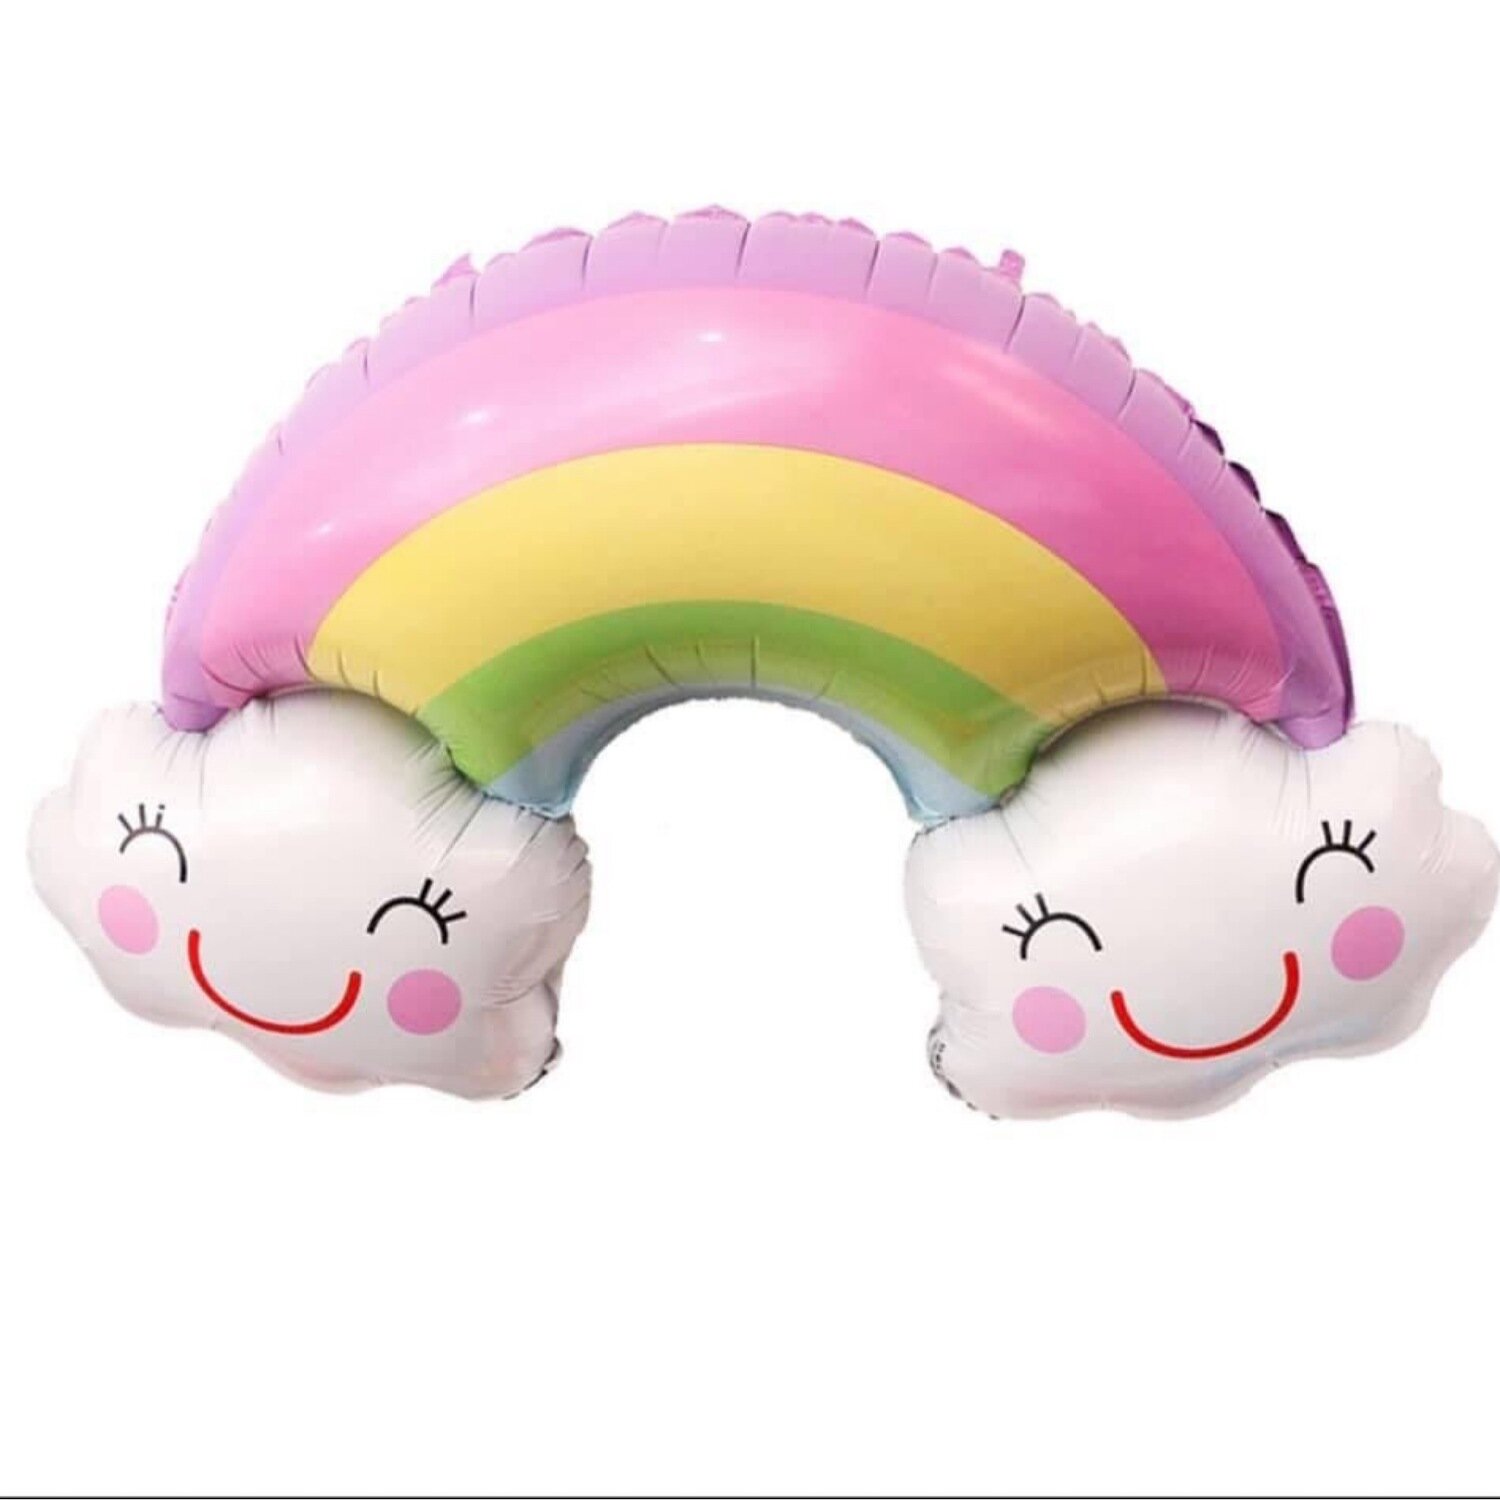 Smiley Face Rainbow, How do you want the balloon?: Deflated